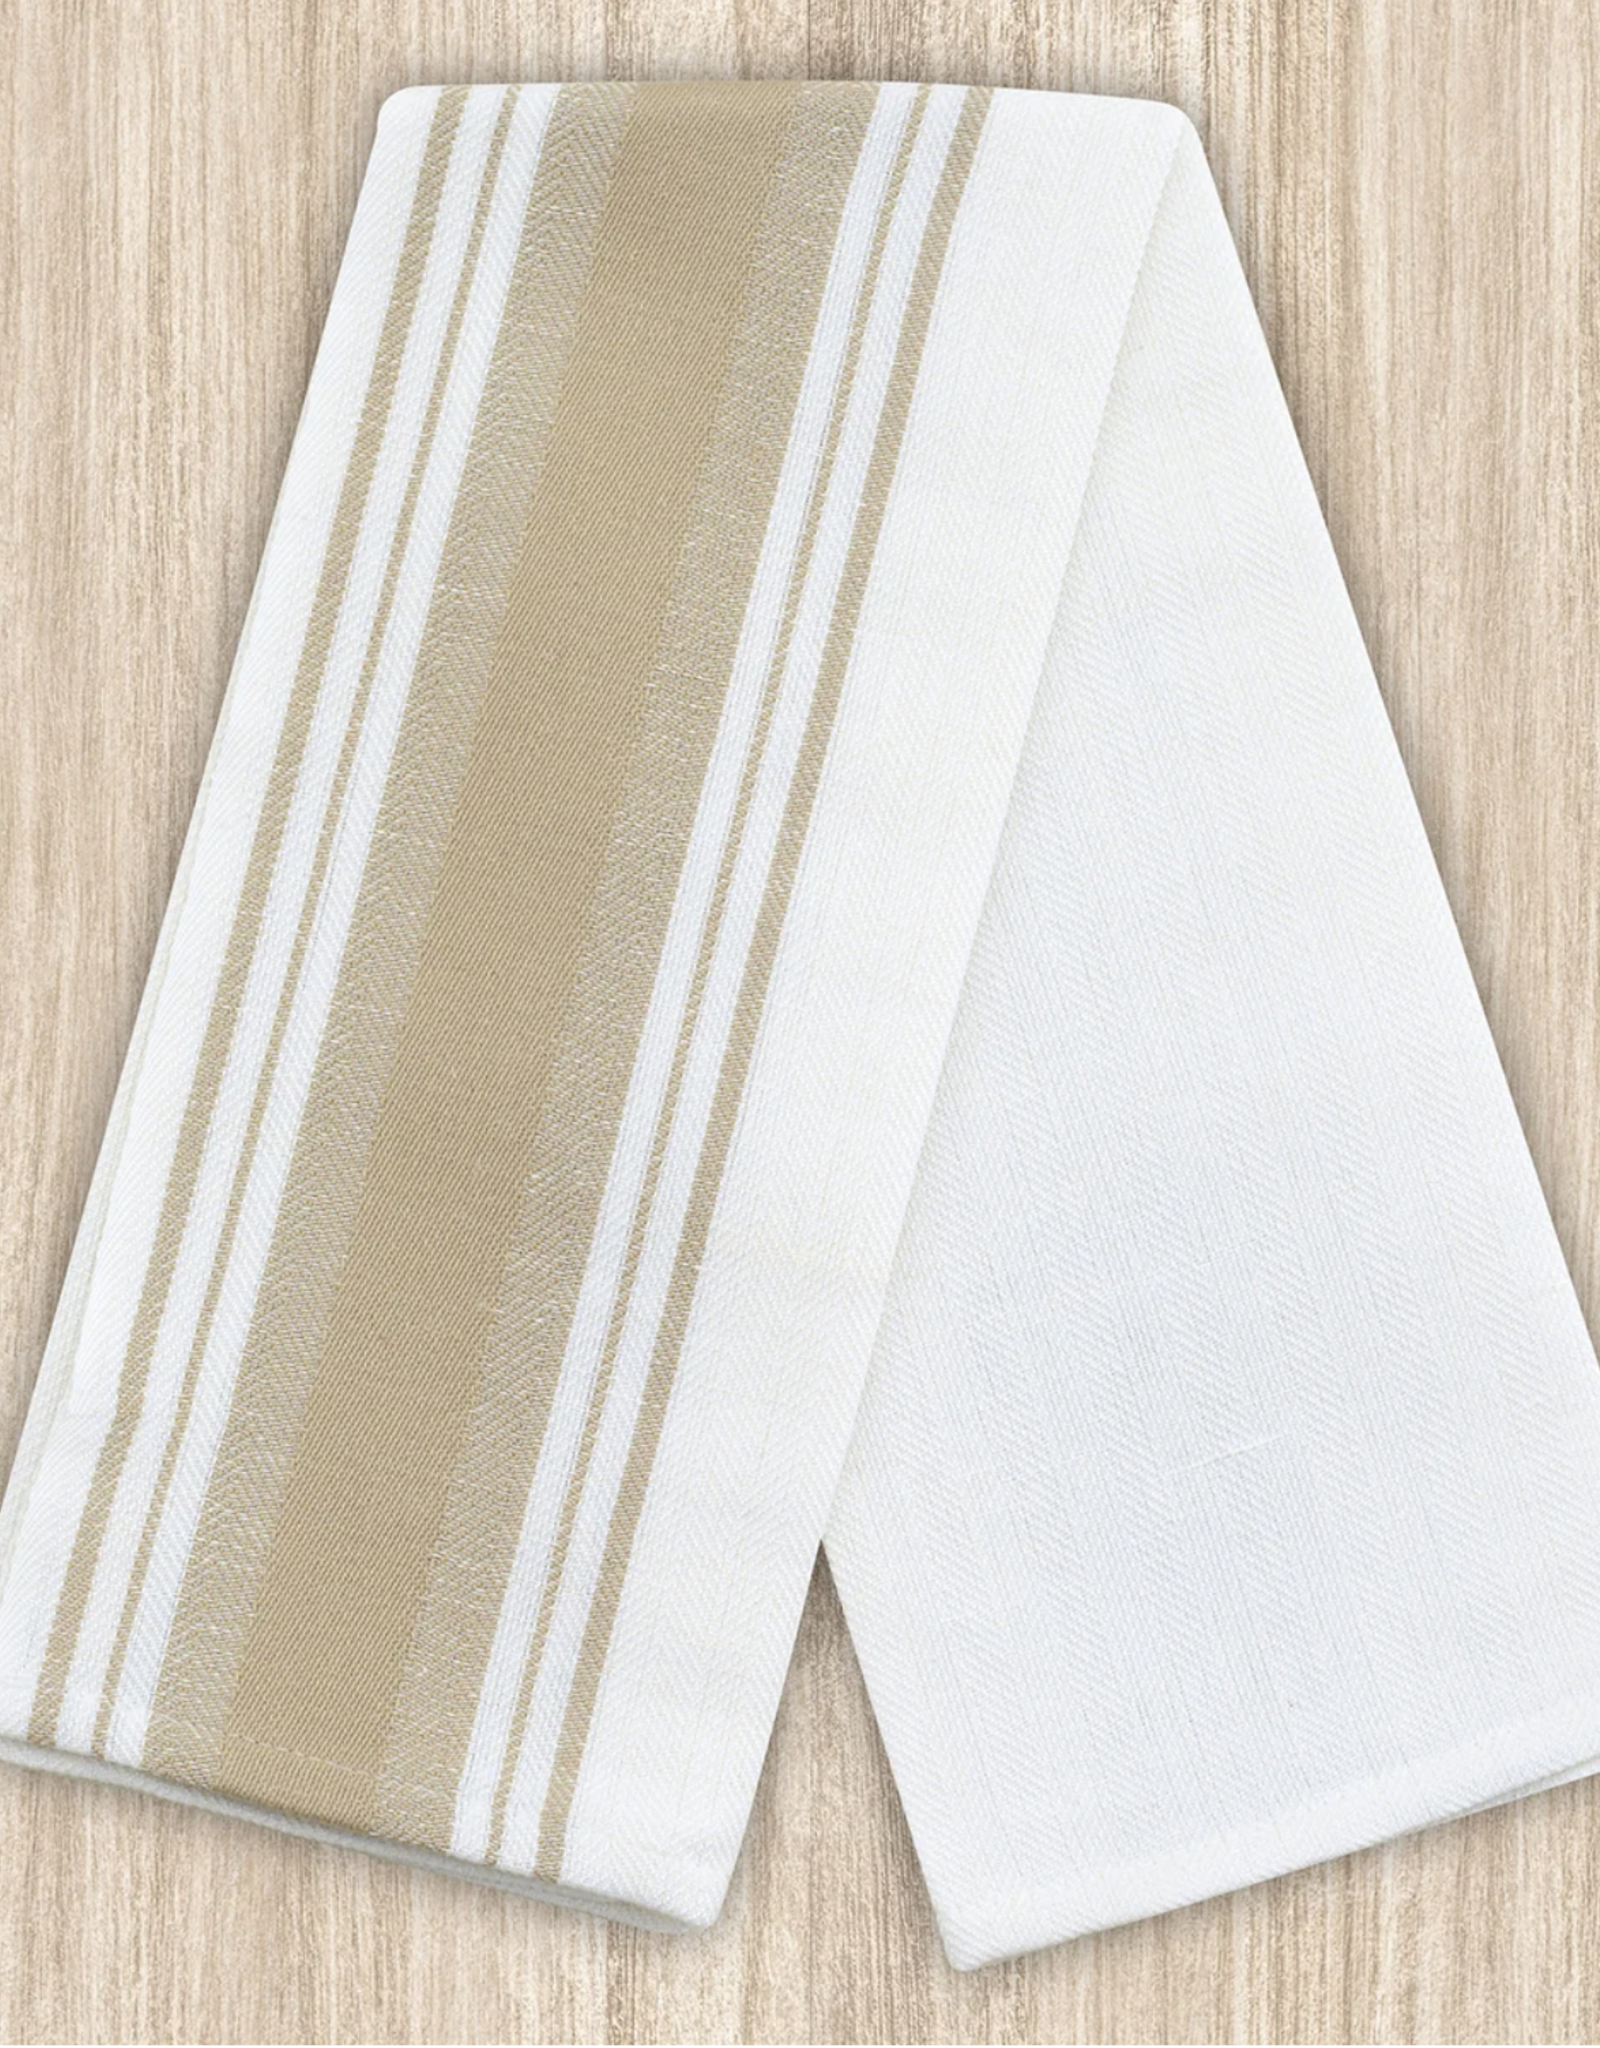 Busatti Italy Busatti Due Fragole - Kitchen towel  (Color - Sand) 60% Linen 40% Cotton